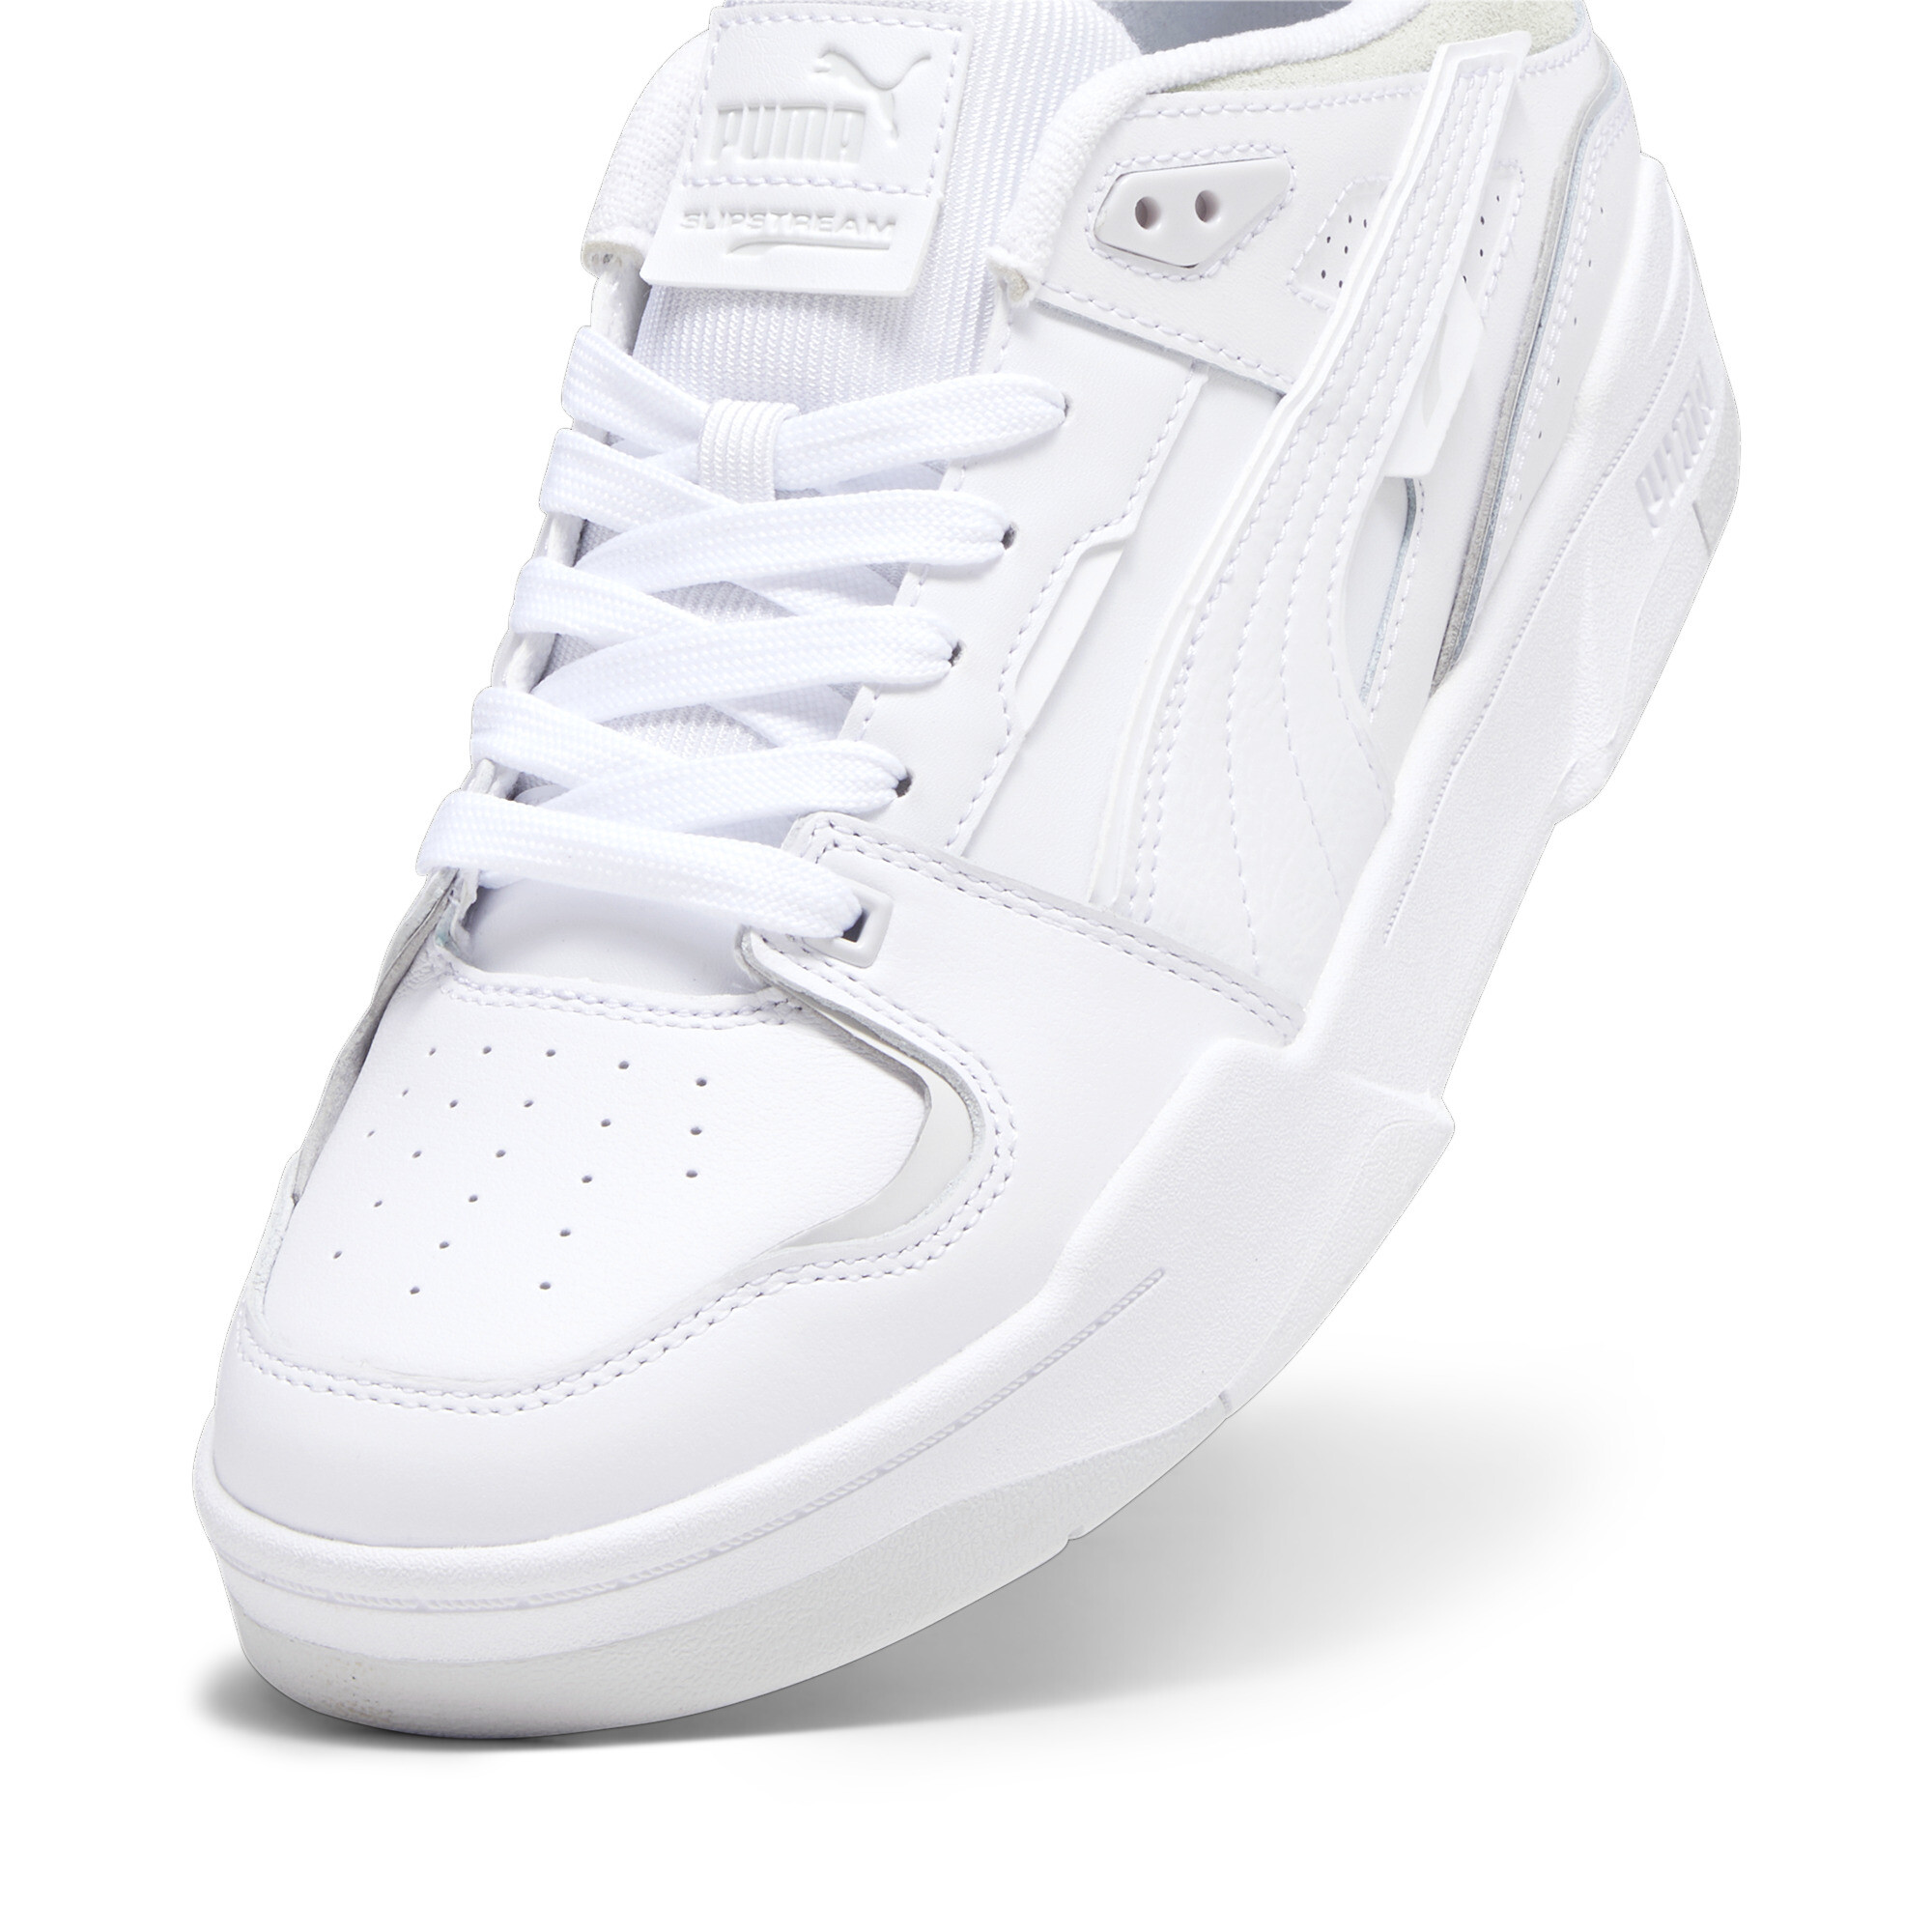 Men's PUMA Slipstream Bball Sneakers In White, Size EU 42.5